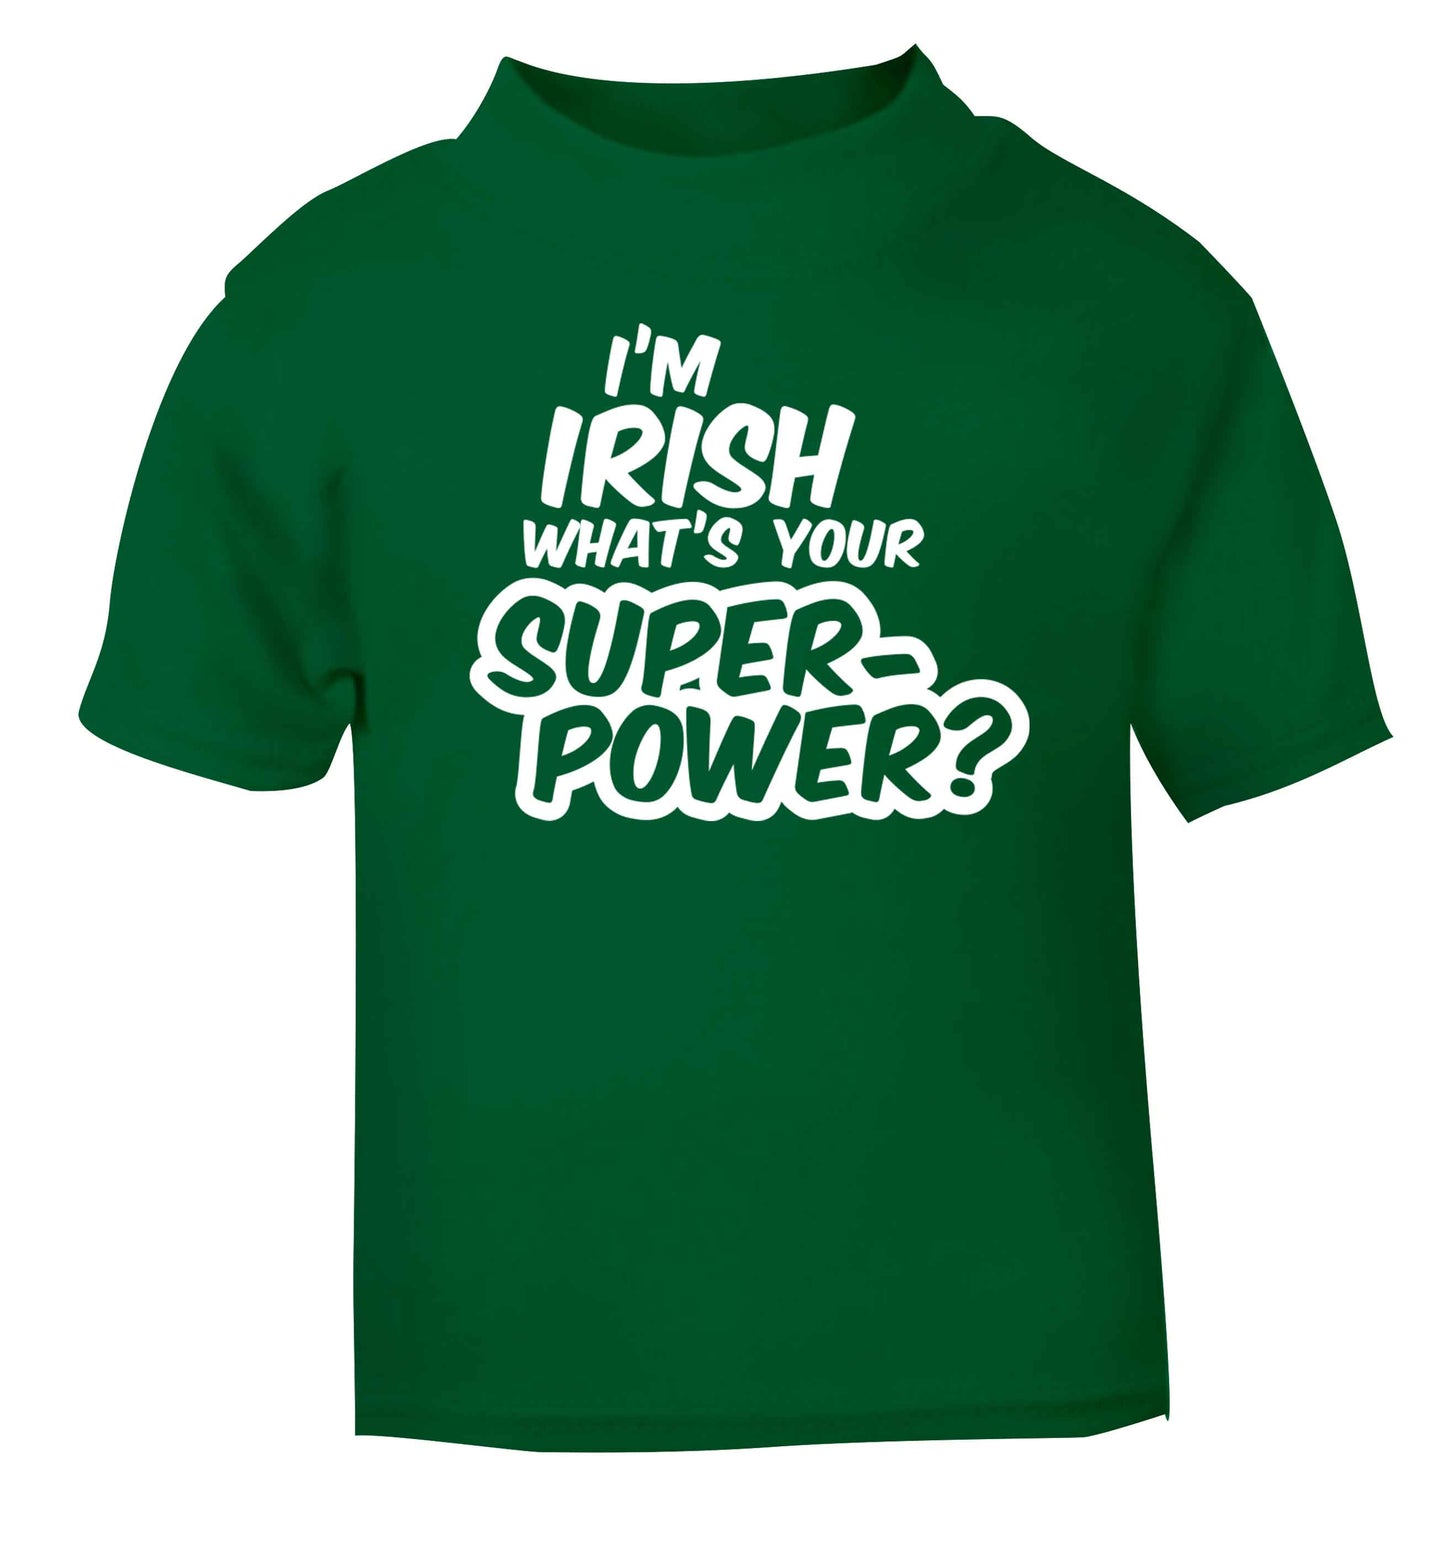 I'm Irish what's your superpower? green baby toddler Tshirt 2 Years